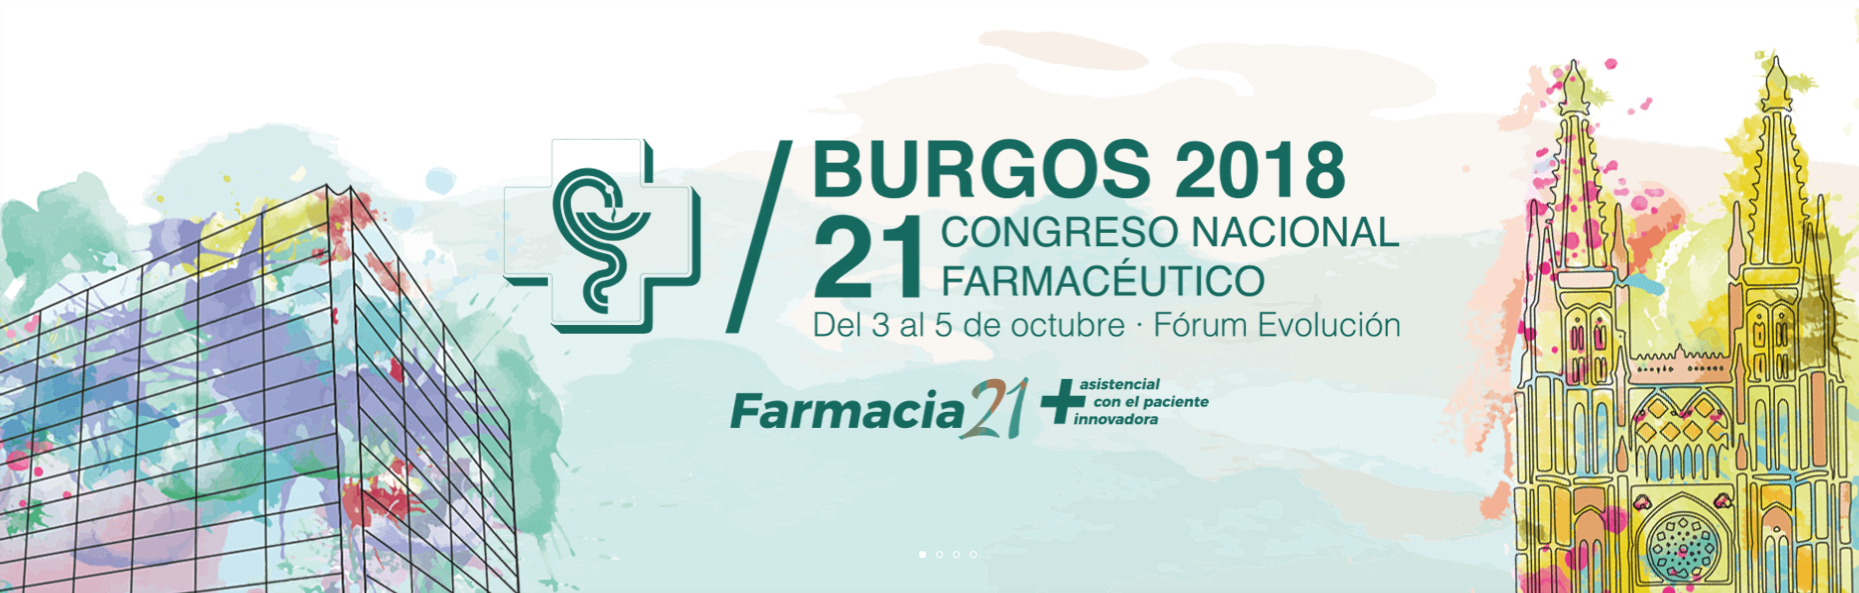 Farmamundi acude al 21 Congreso Nacional Farmacéutico